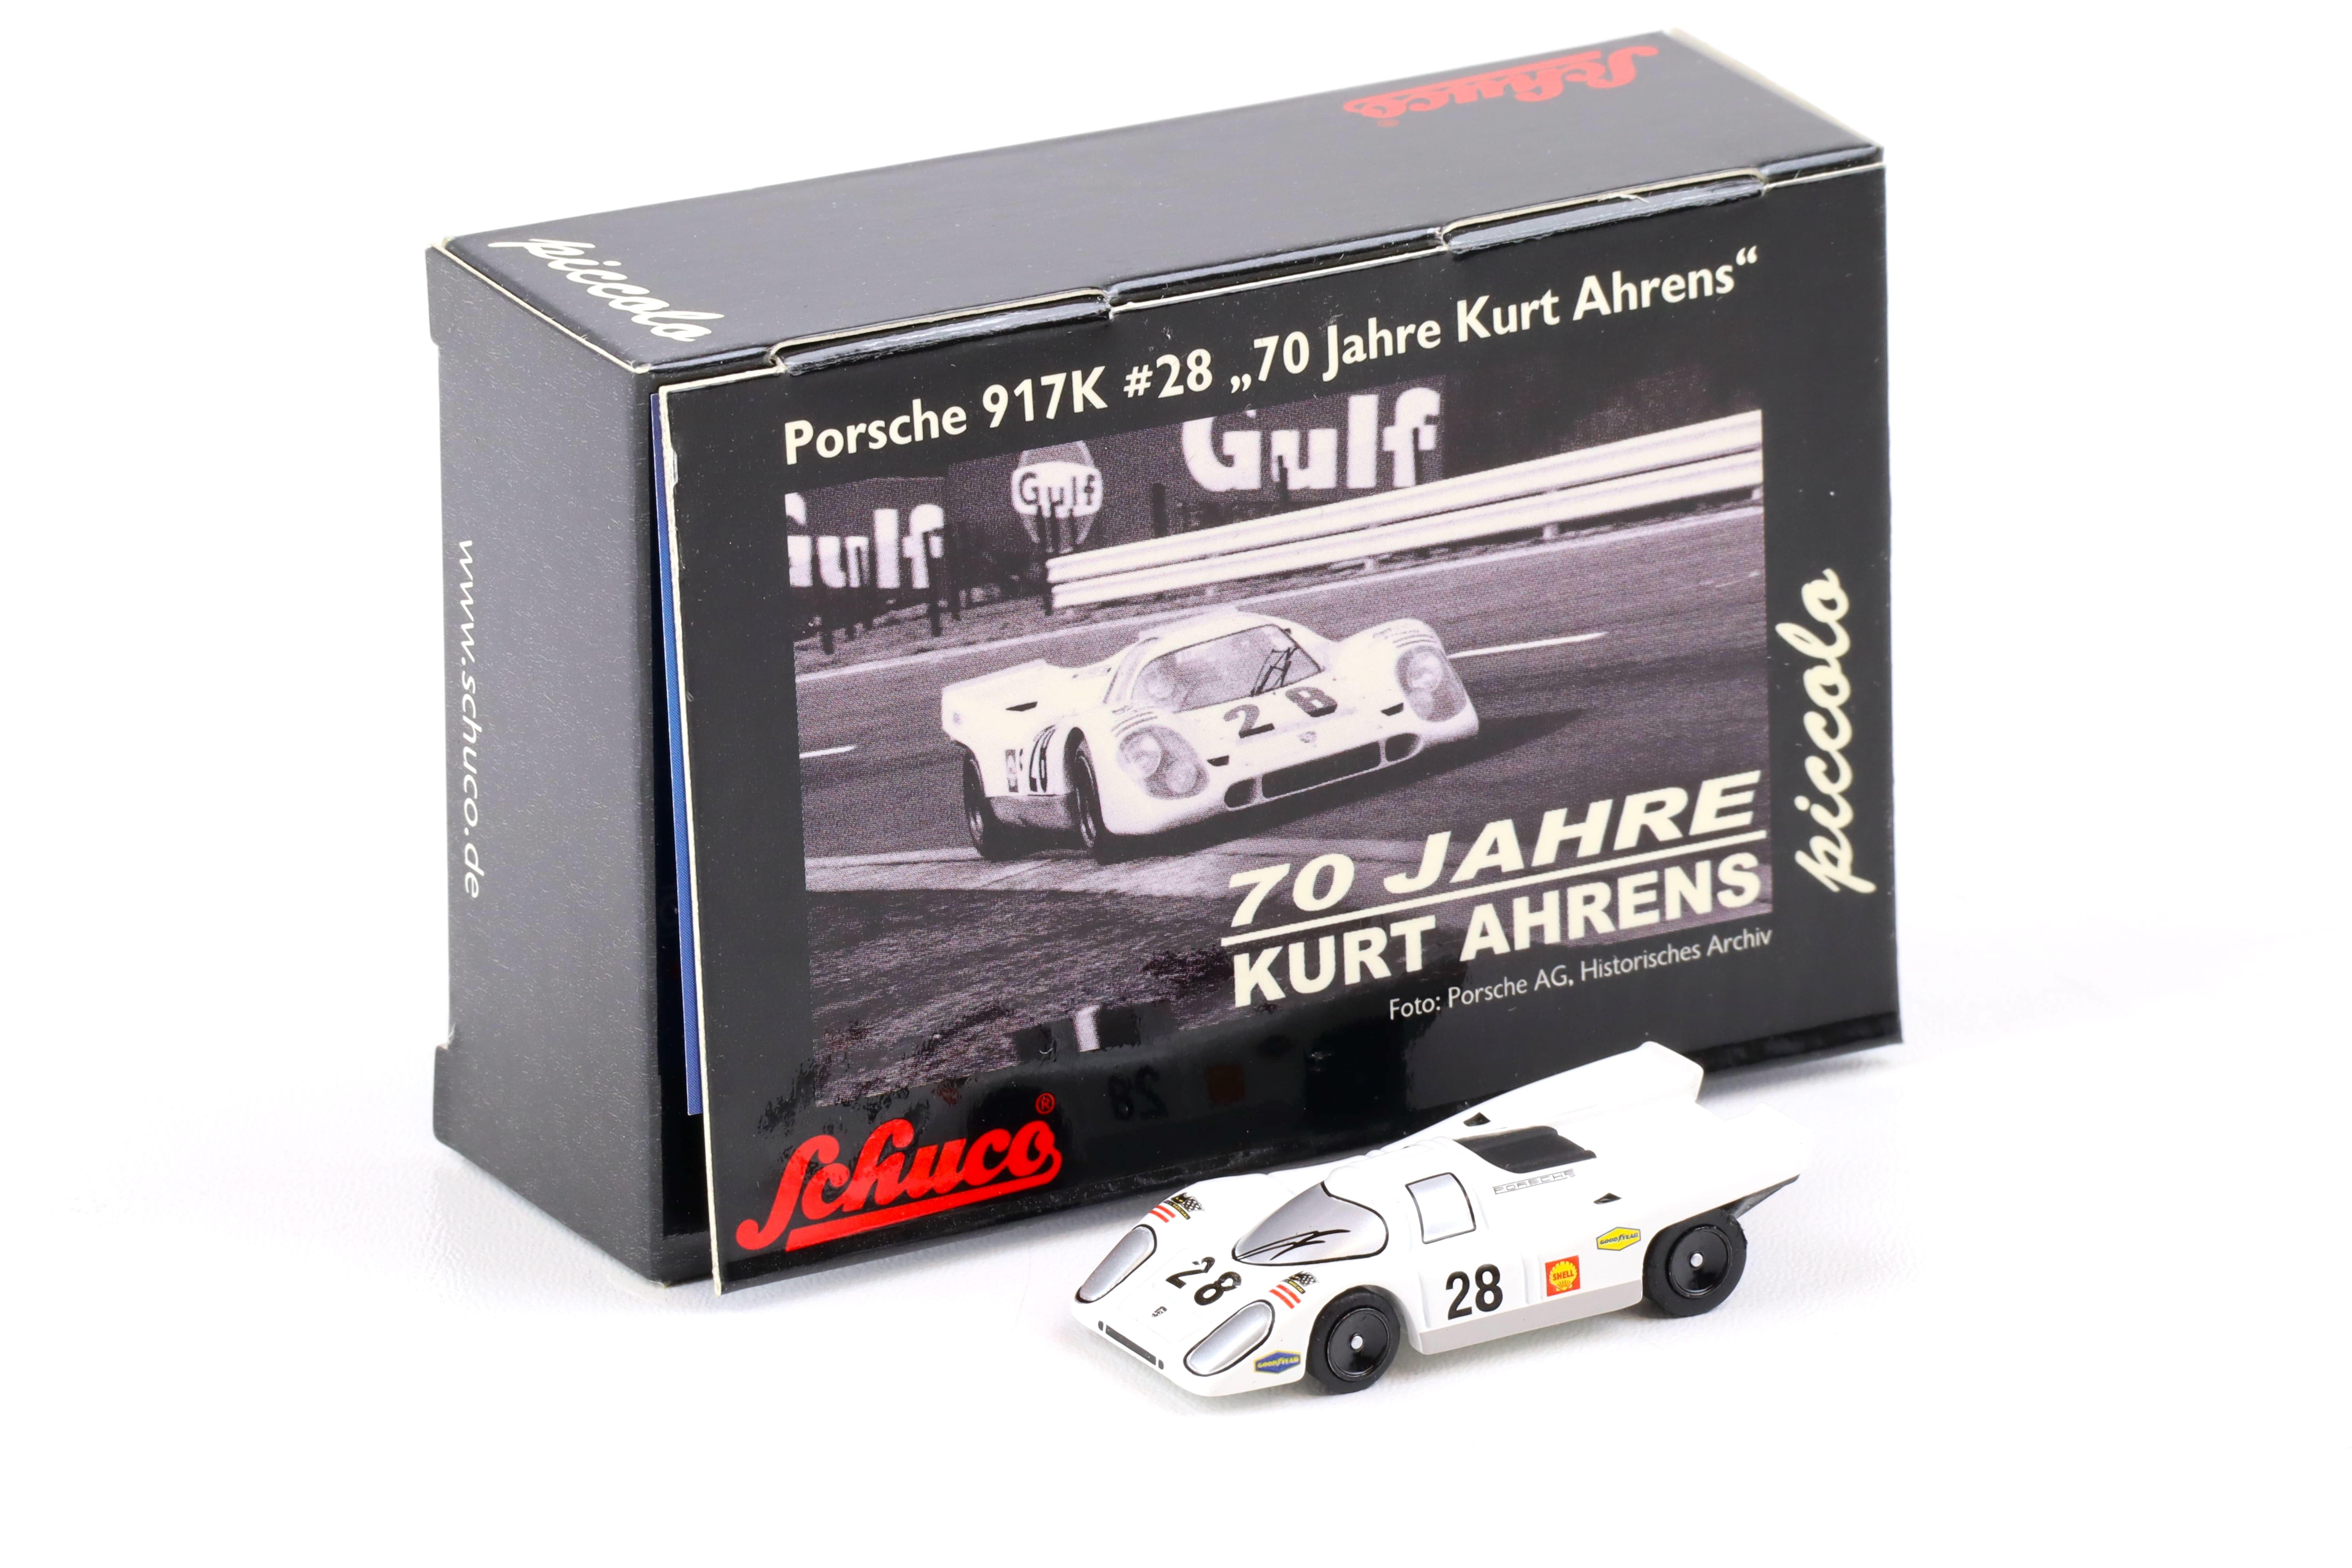 Schuco Piccolo Porsche 917K #28 white 70 Jahre Kurt Ahrens